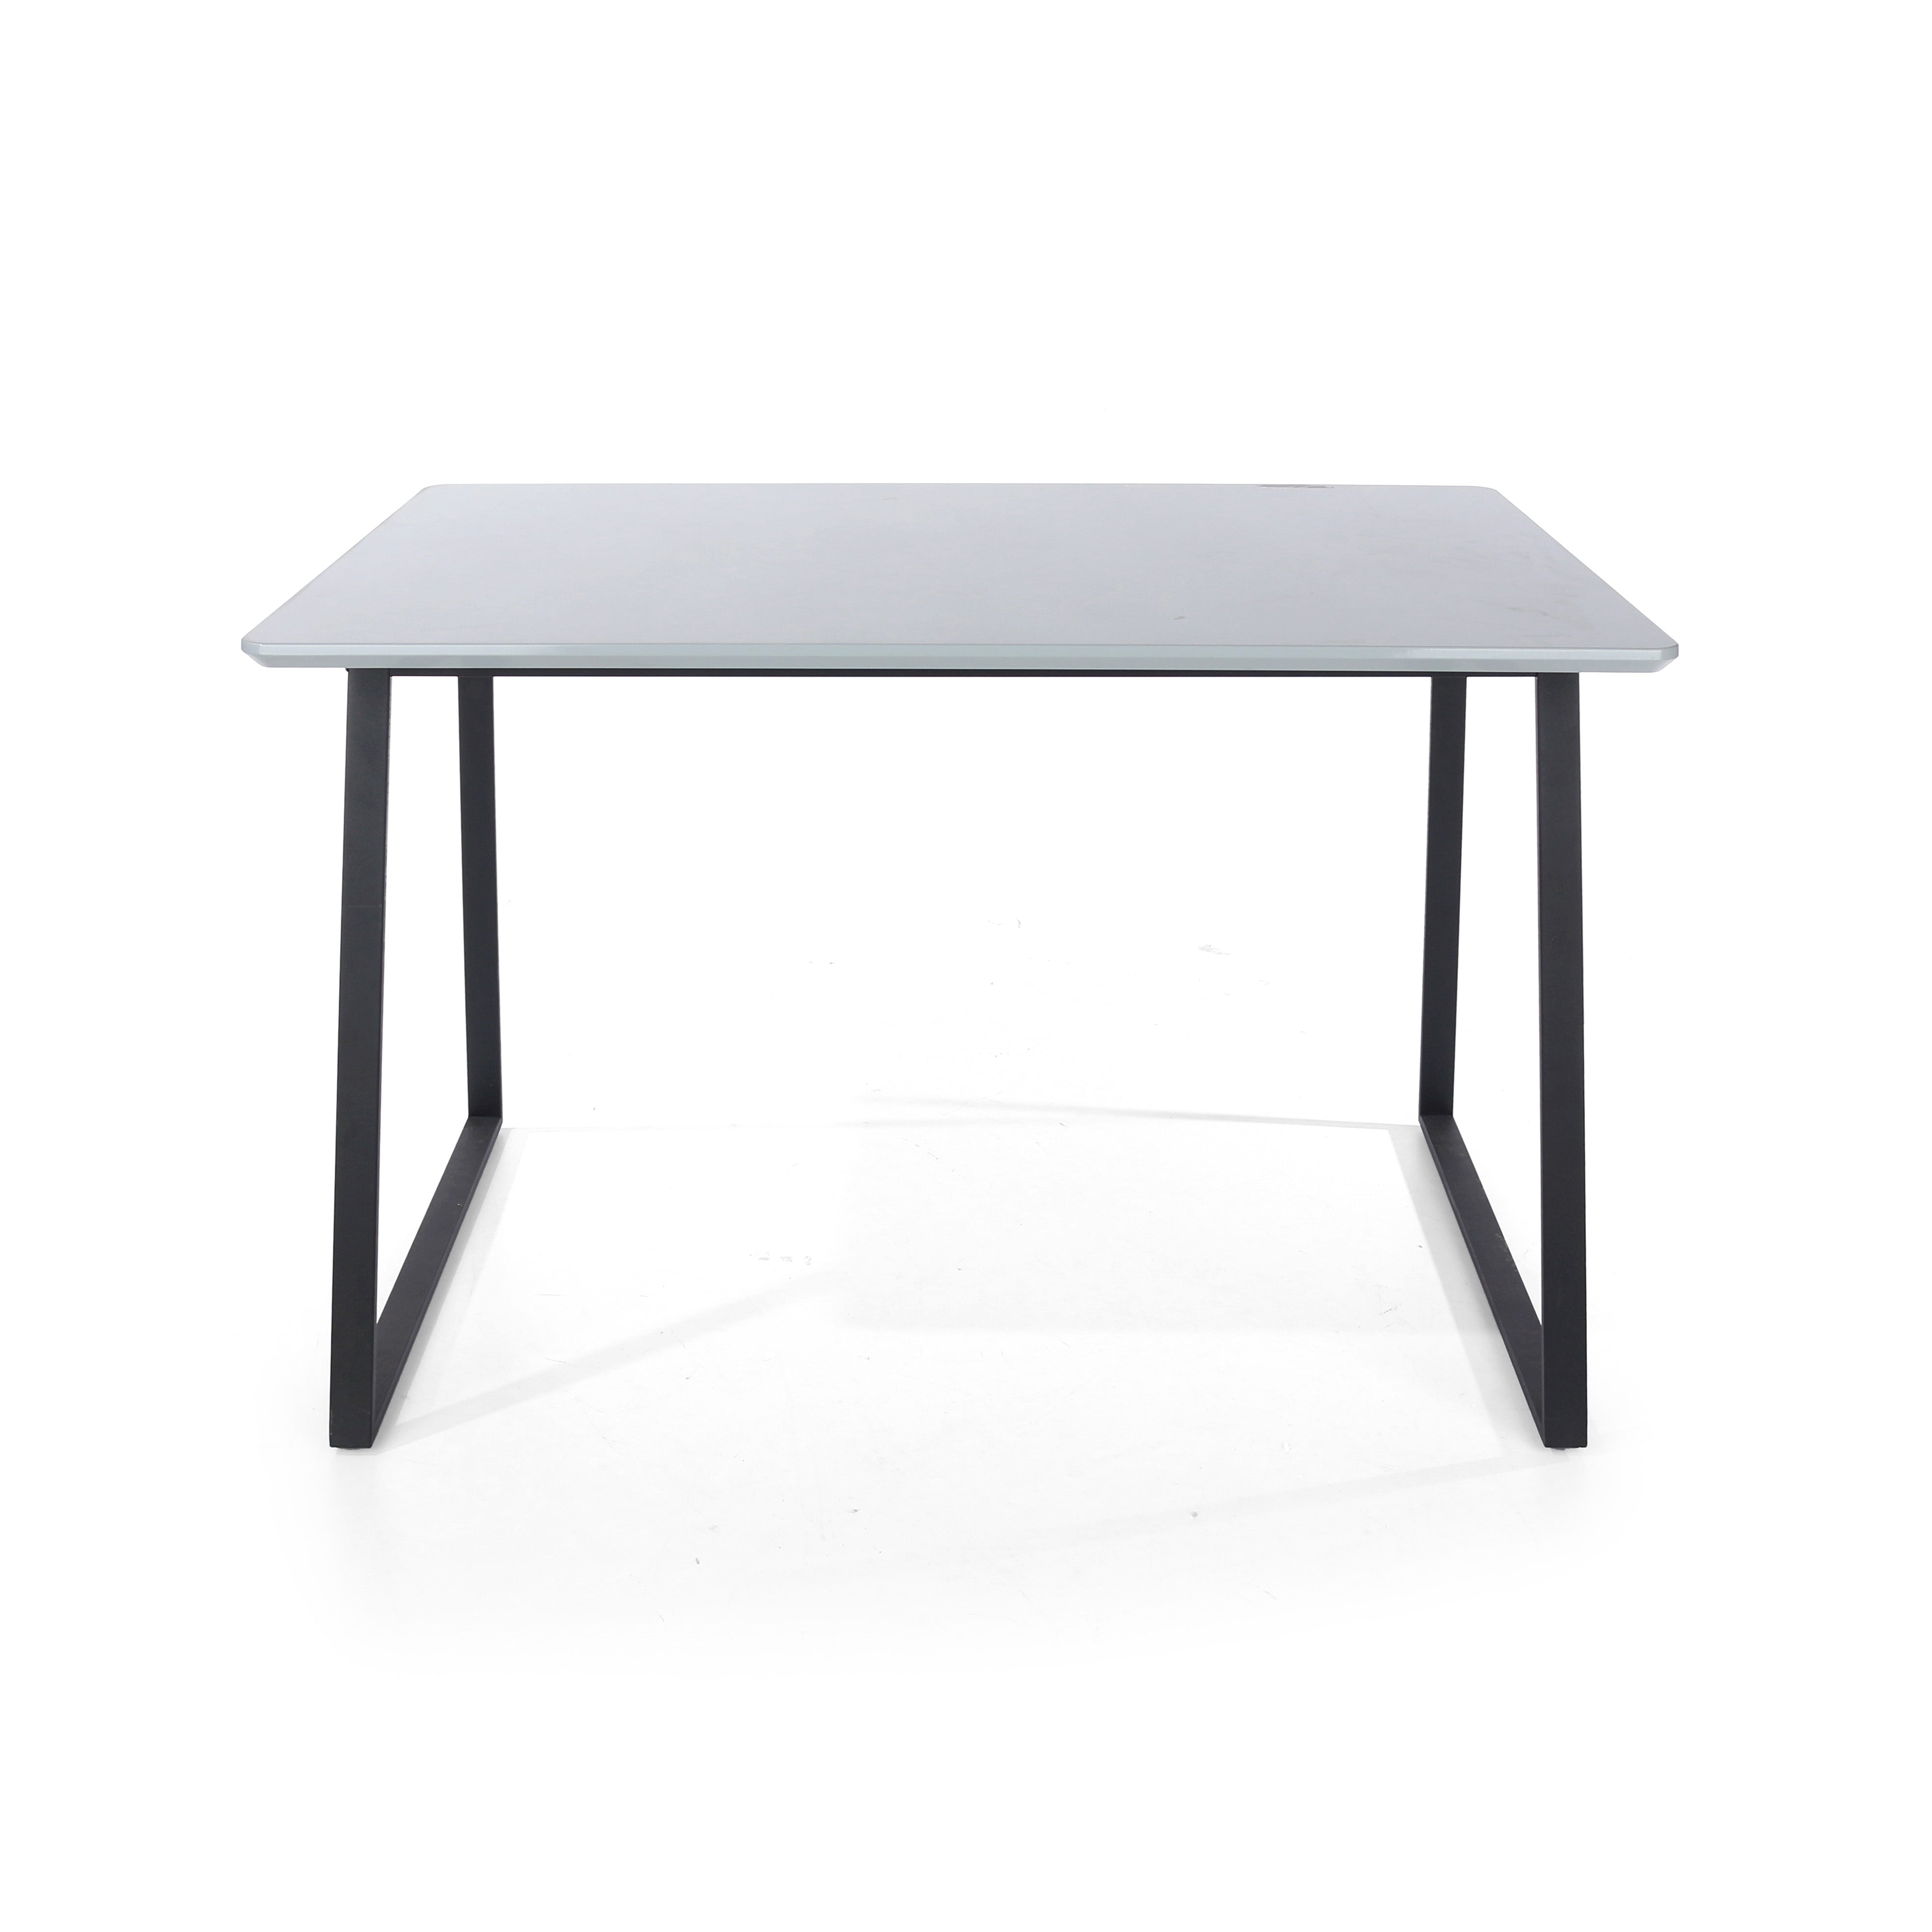 Rectangular Table With Black Metal Legs, High Gloss Grey